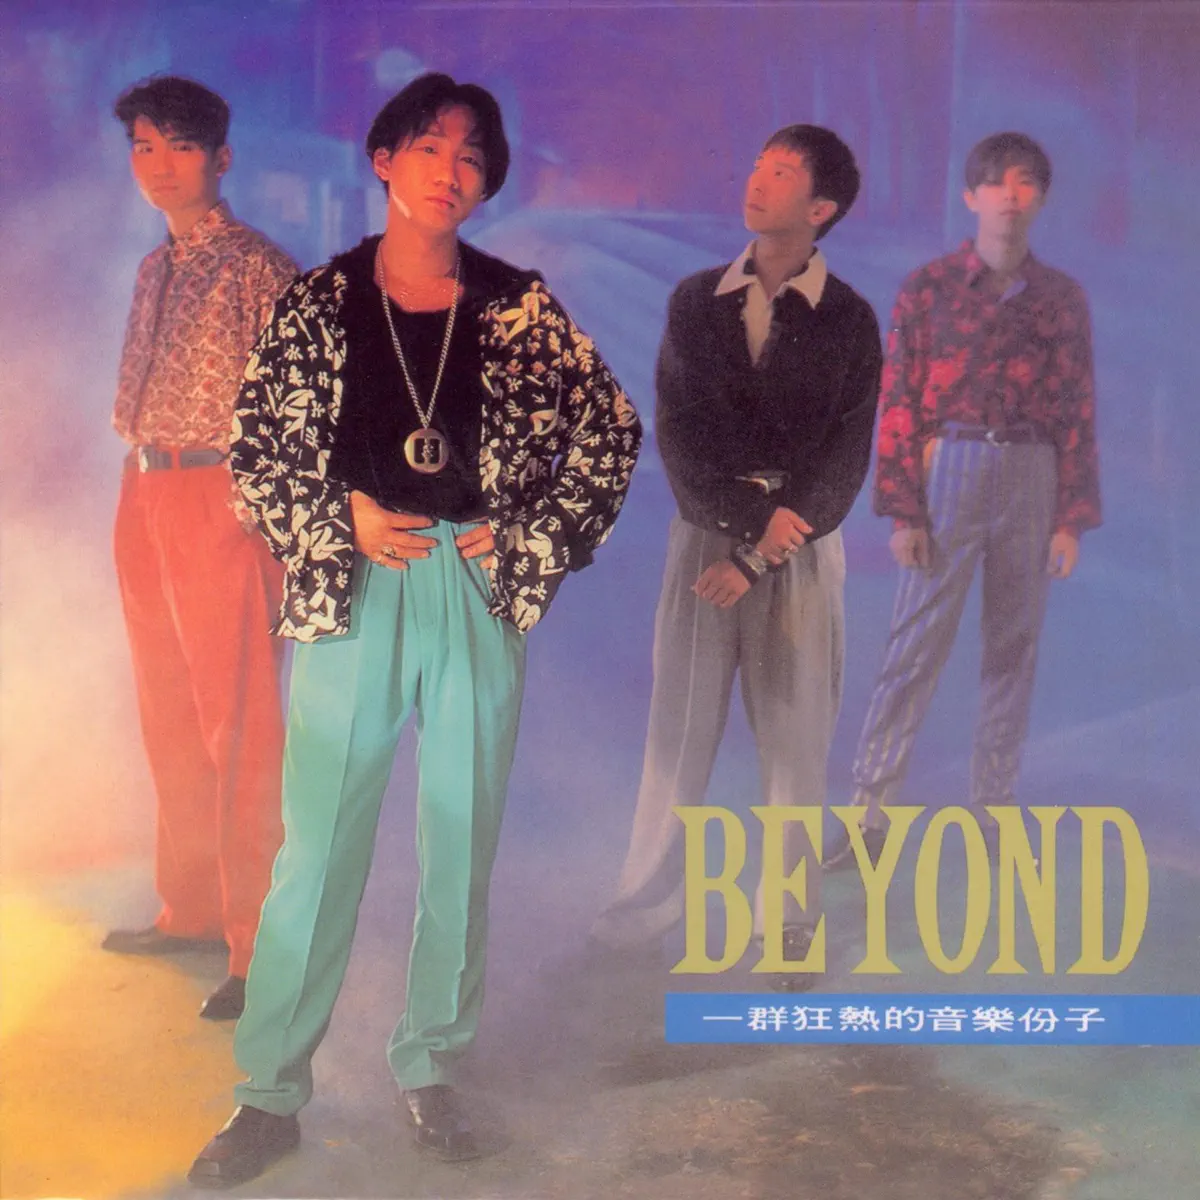 Beyond - 大地 (2010) [iTunes Plus AAC M4A]-新房子